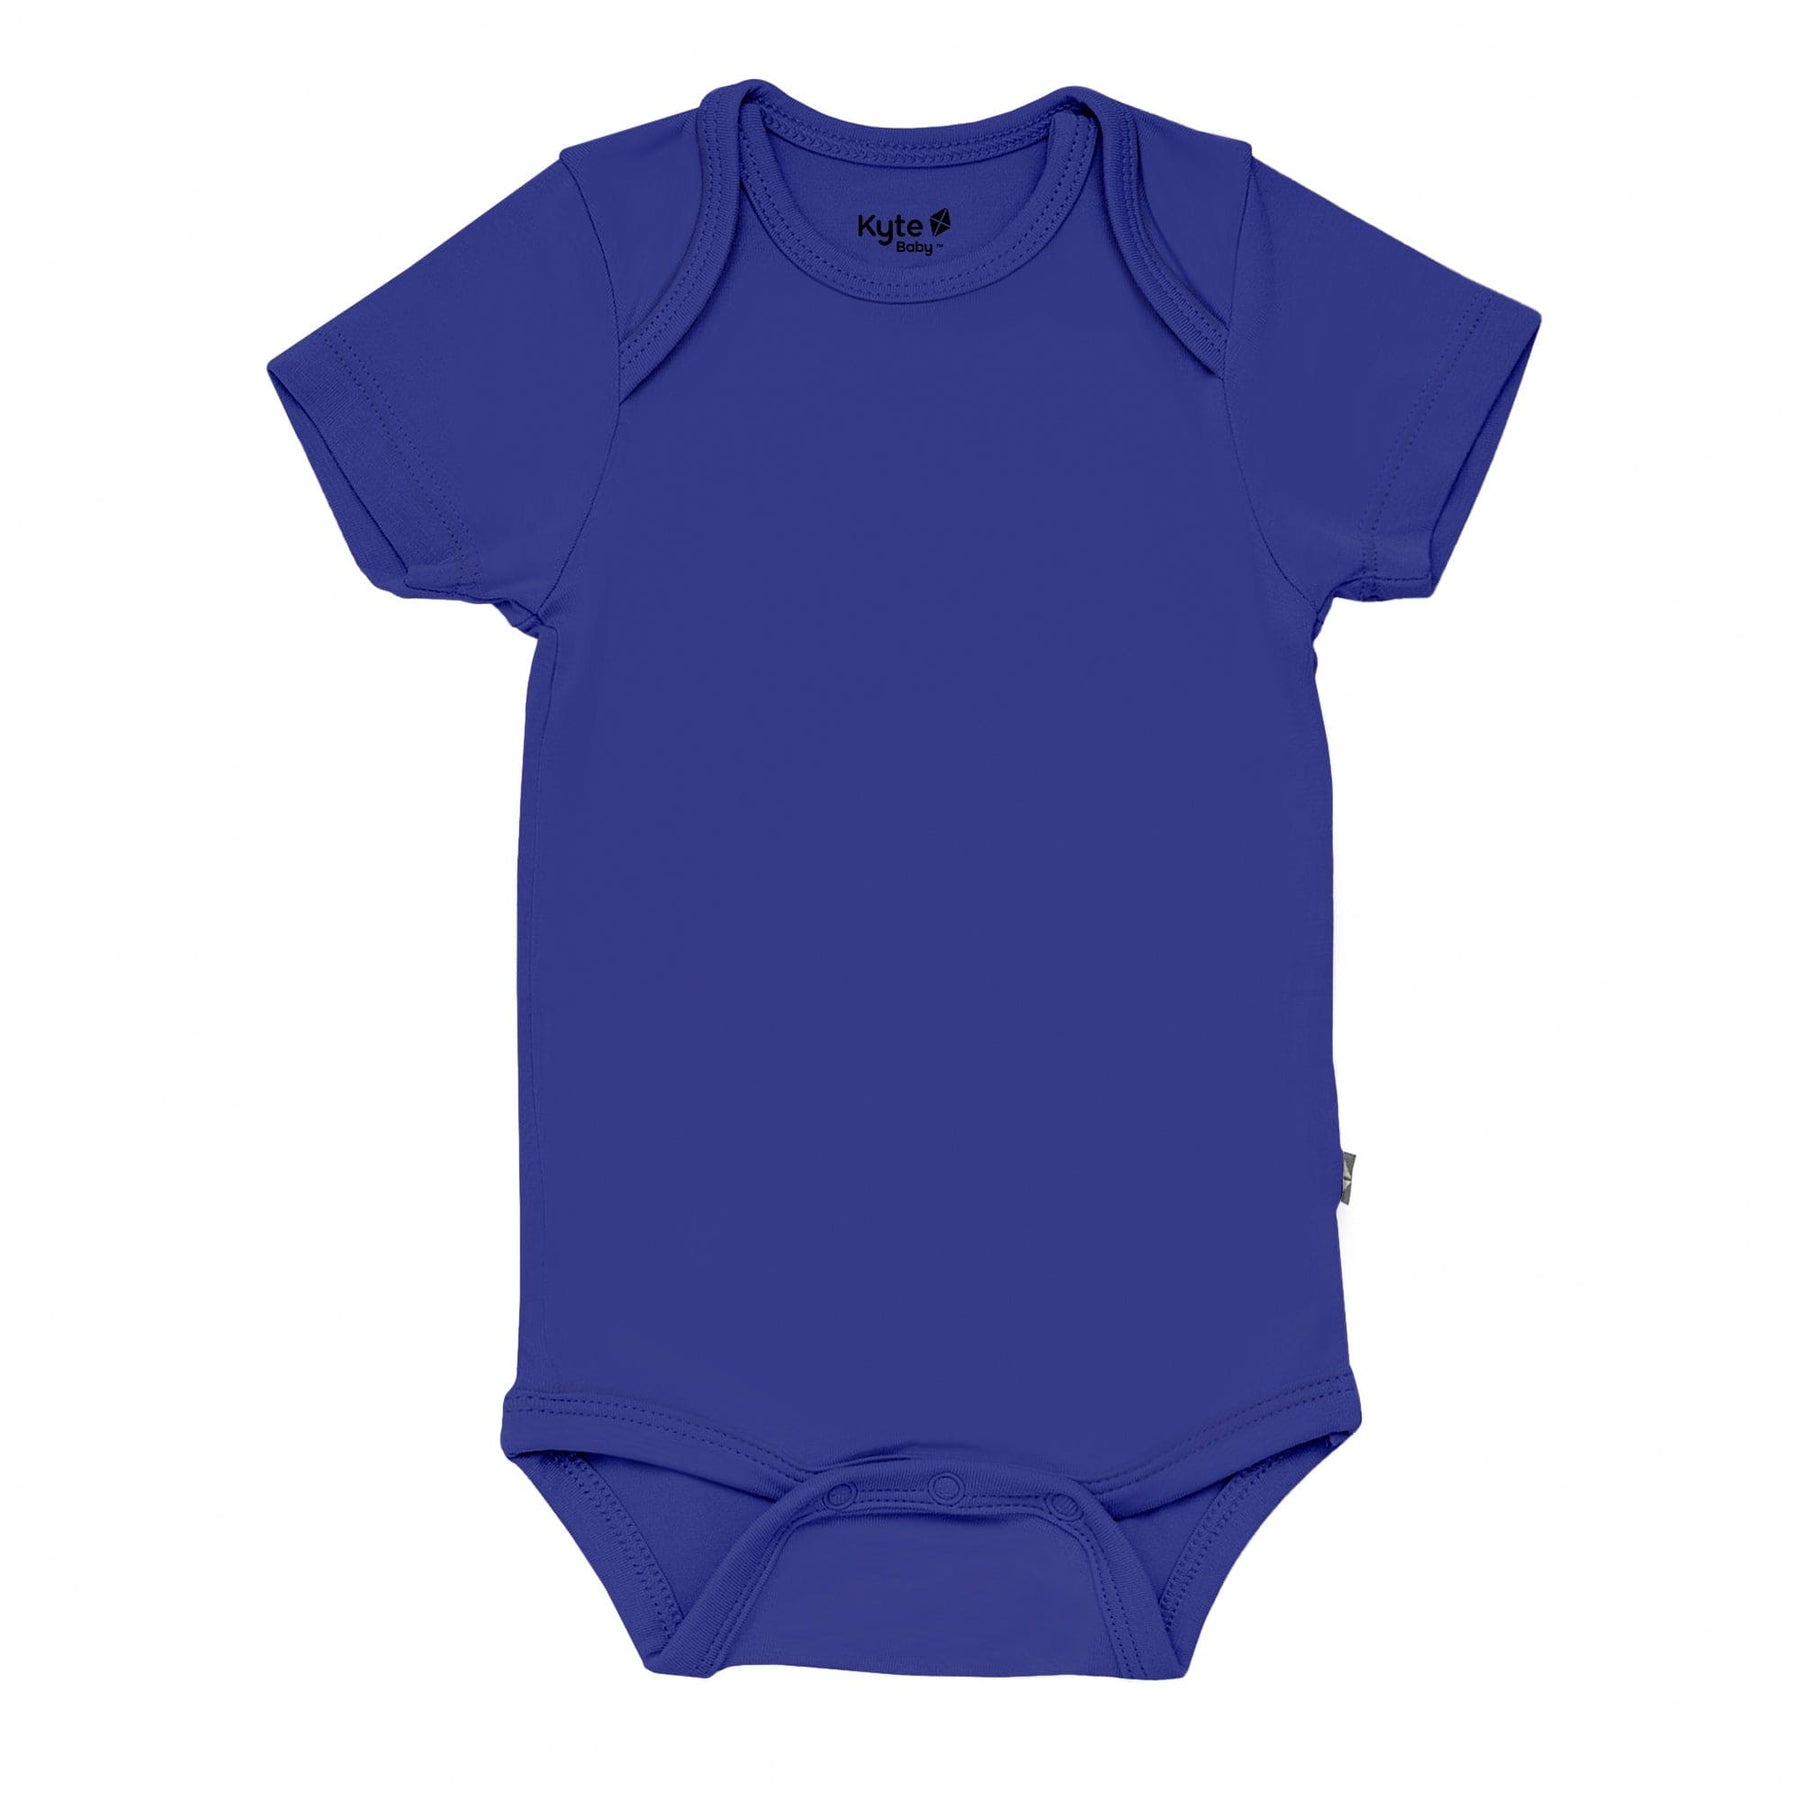 Kyte Baby Short Sleeve Bodysuits Bodysuit in Royal